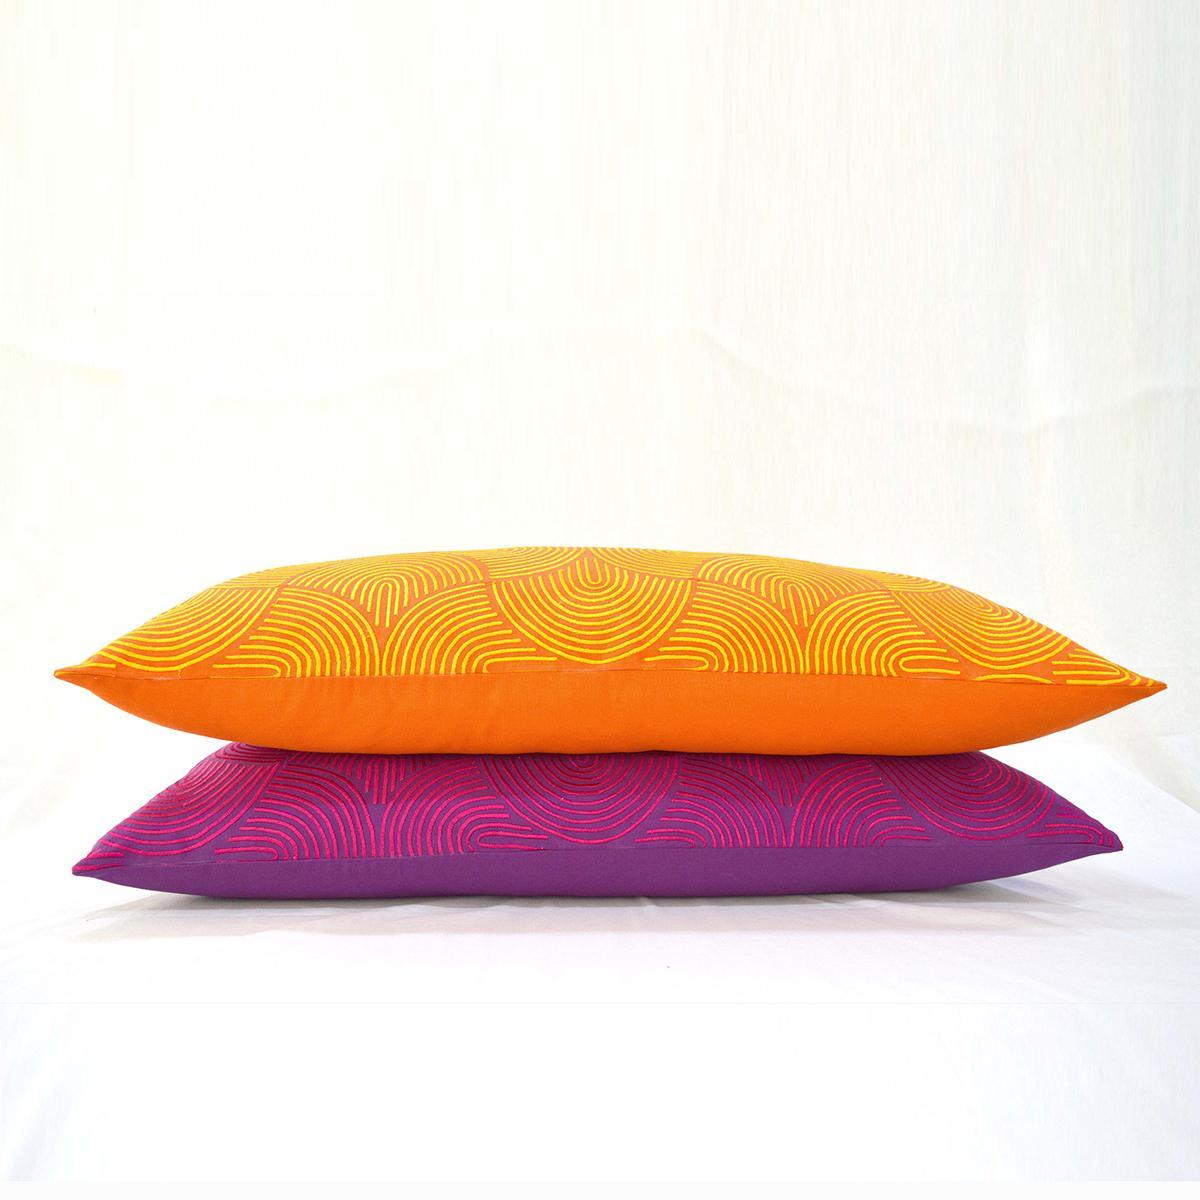 KASHIDAKAARI - Tangerine Long Lumbar Pillow cover with modern retro pattern embroidery, sizes available